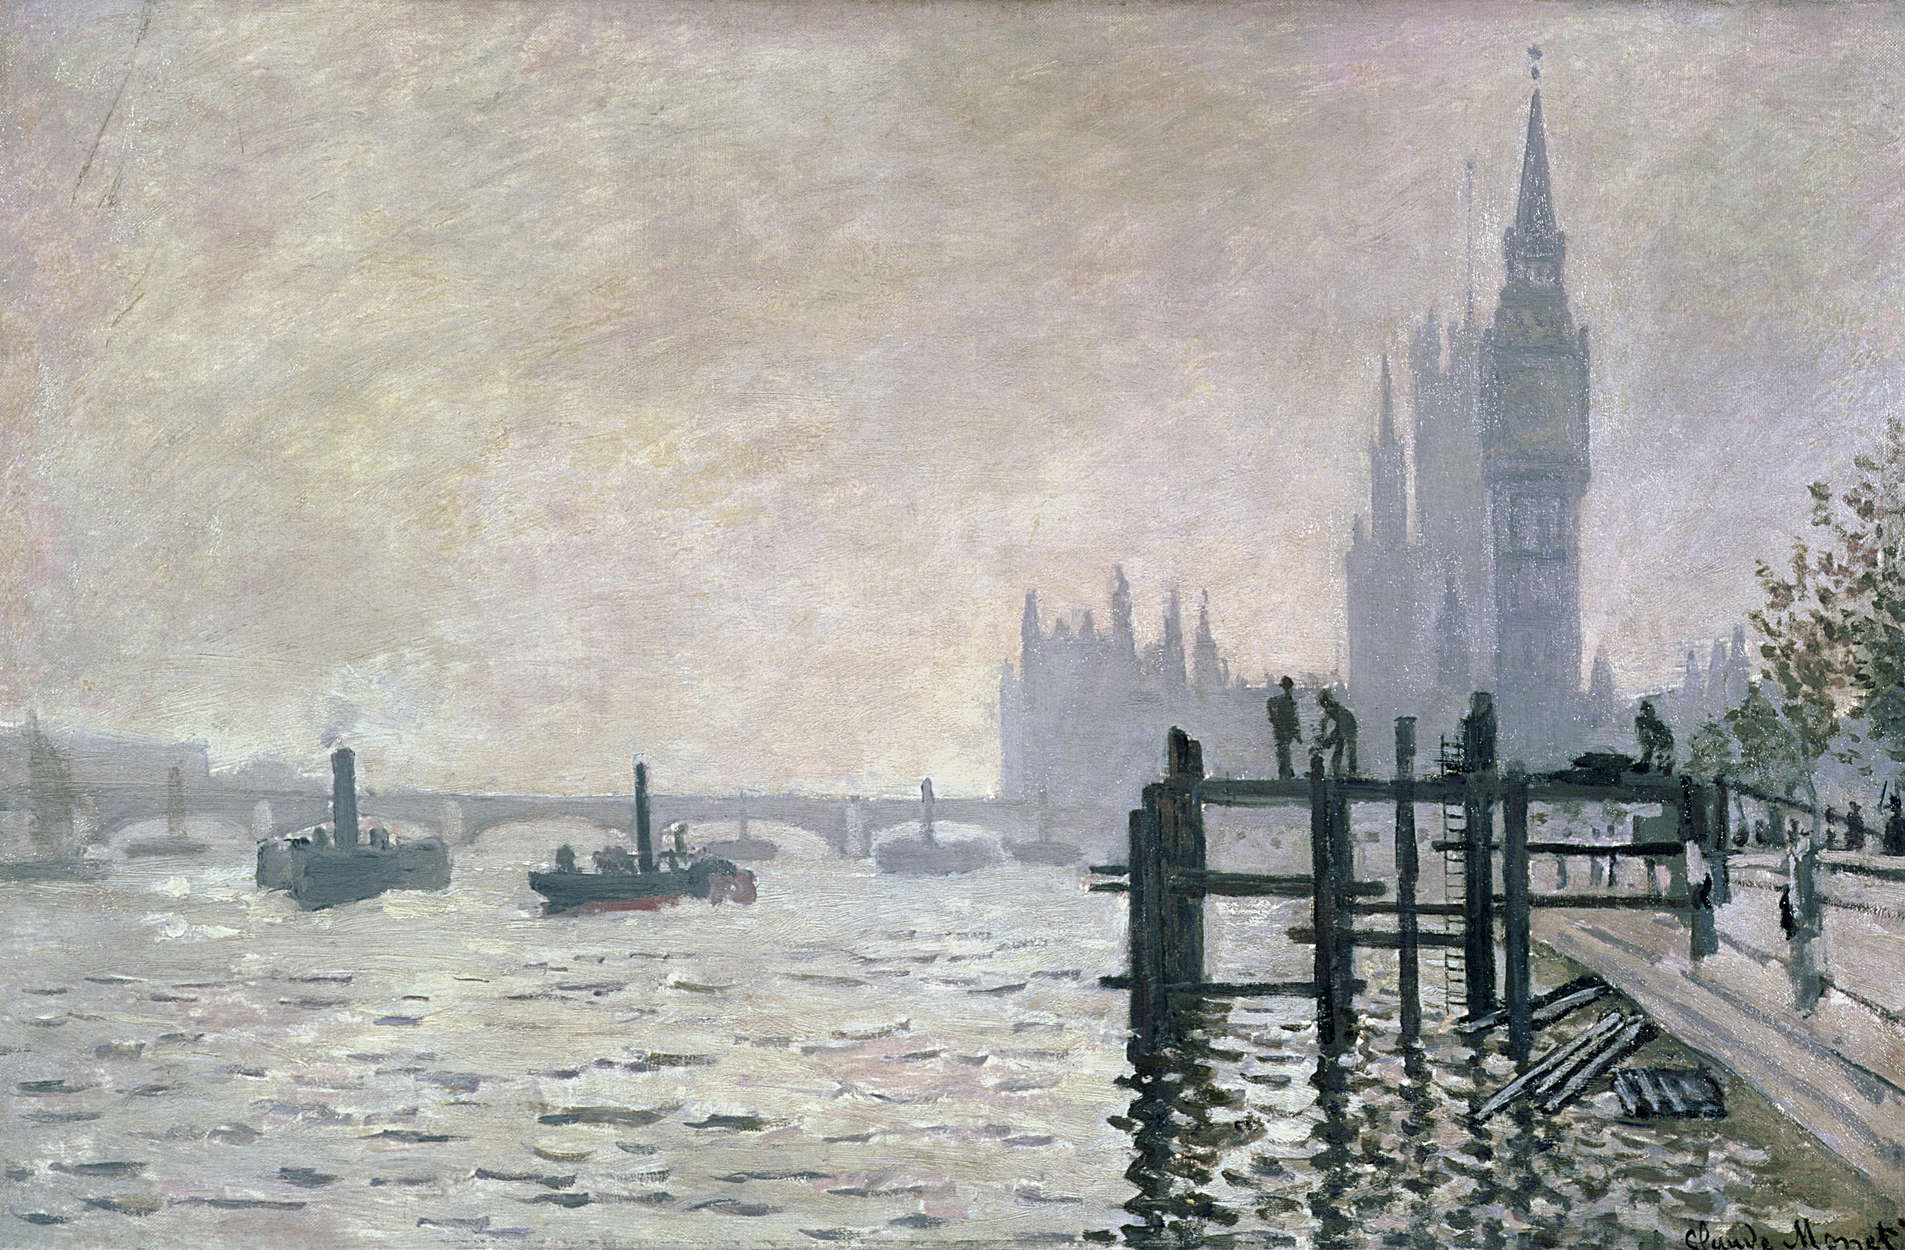             Fotomurali "Il Tamigi sotto Westminster" di Claude Monet
        